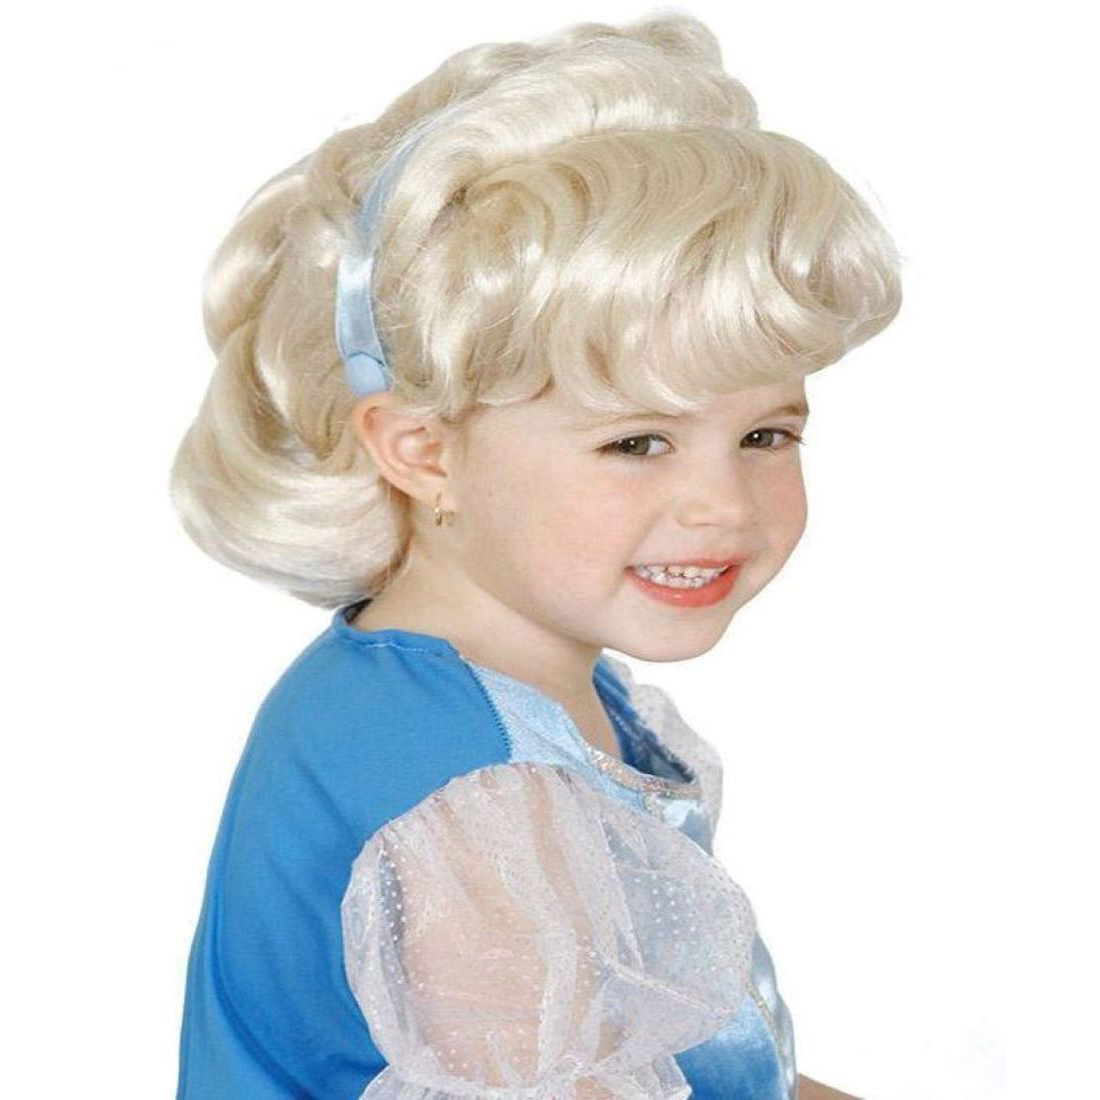 Disney Princess Cinderella Girl's Blonde Up do Costume Wig